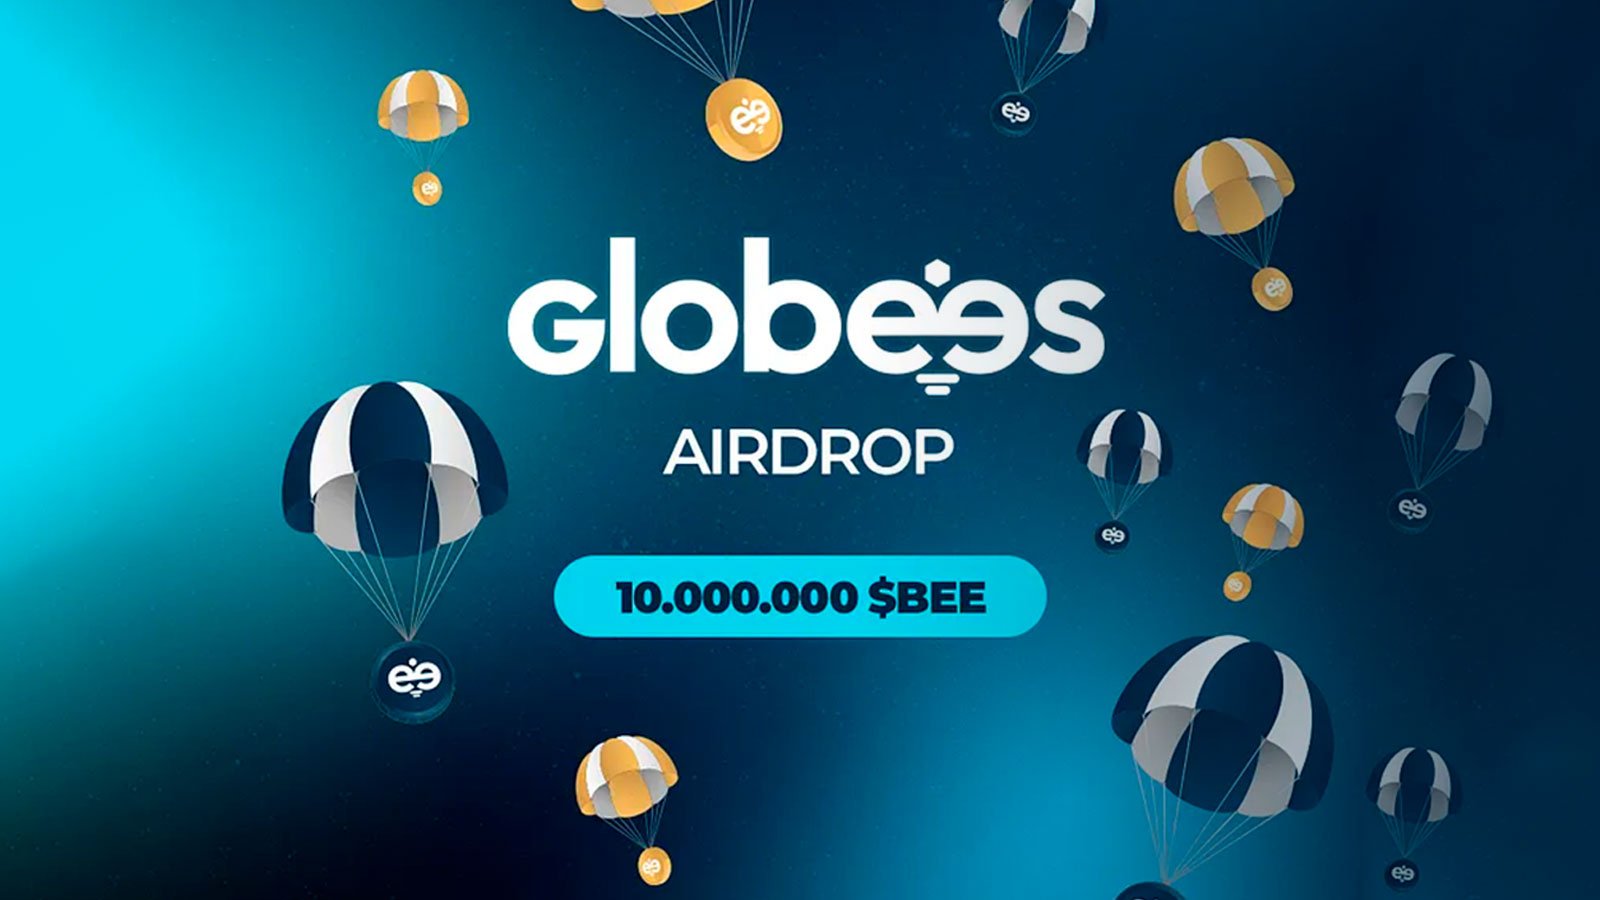 Globees Airdrop